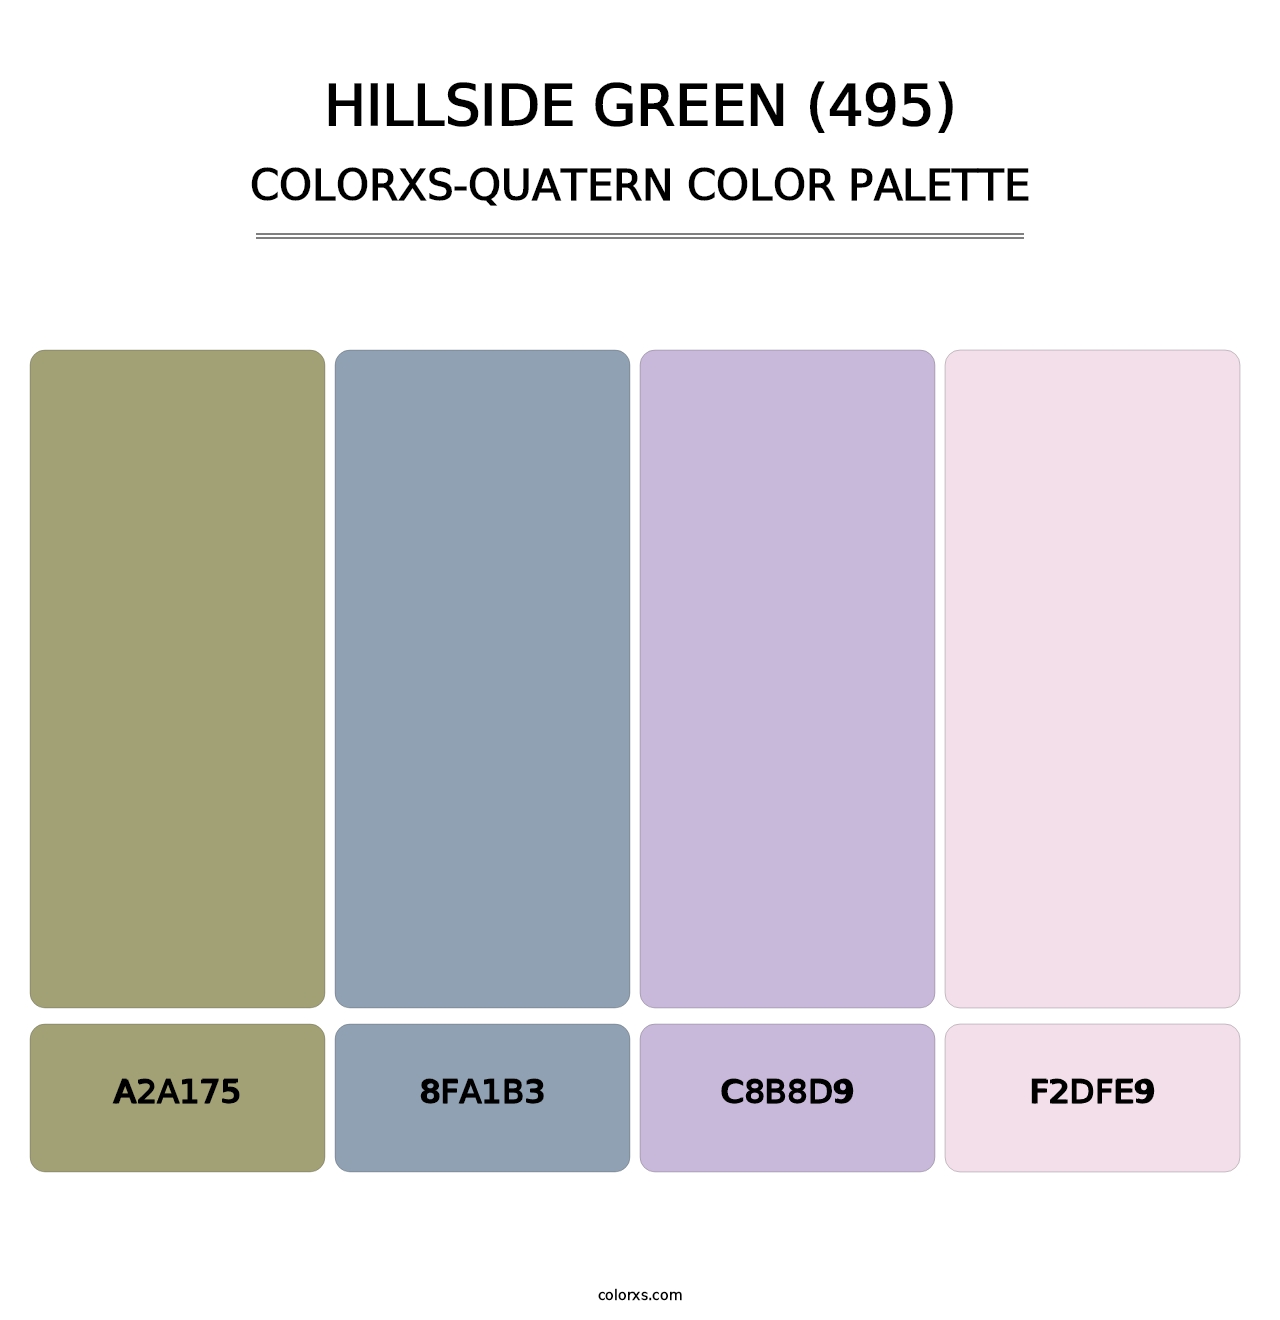 Hillside Green (495) - Colorxs Quatern Palette